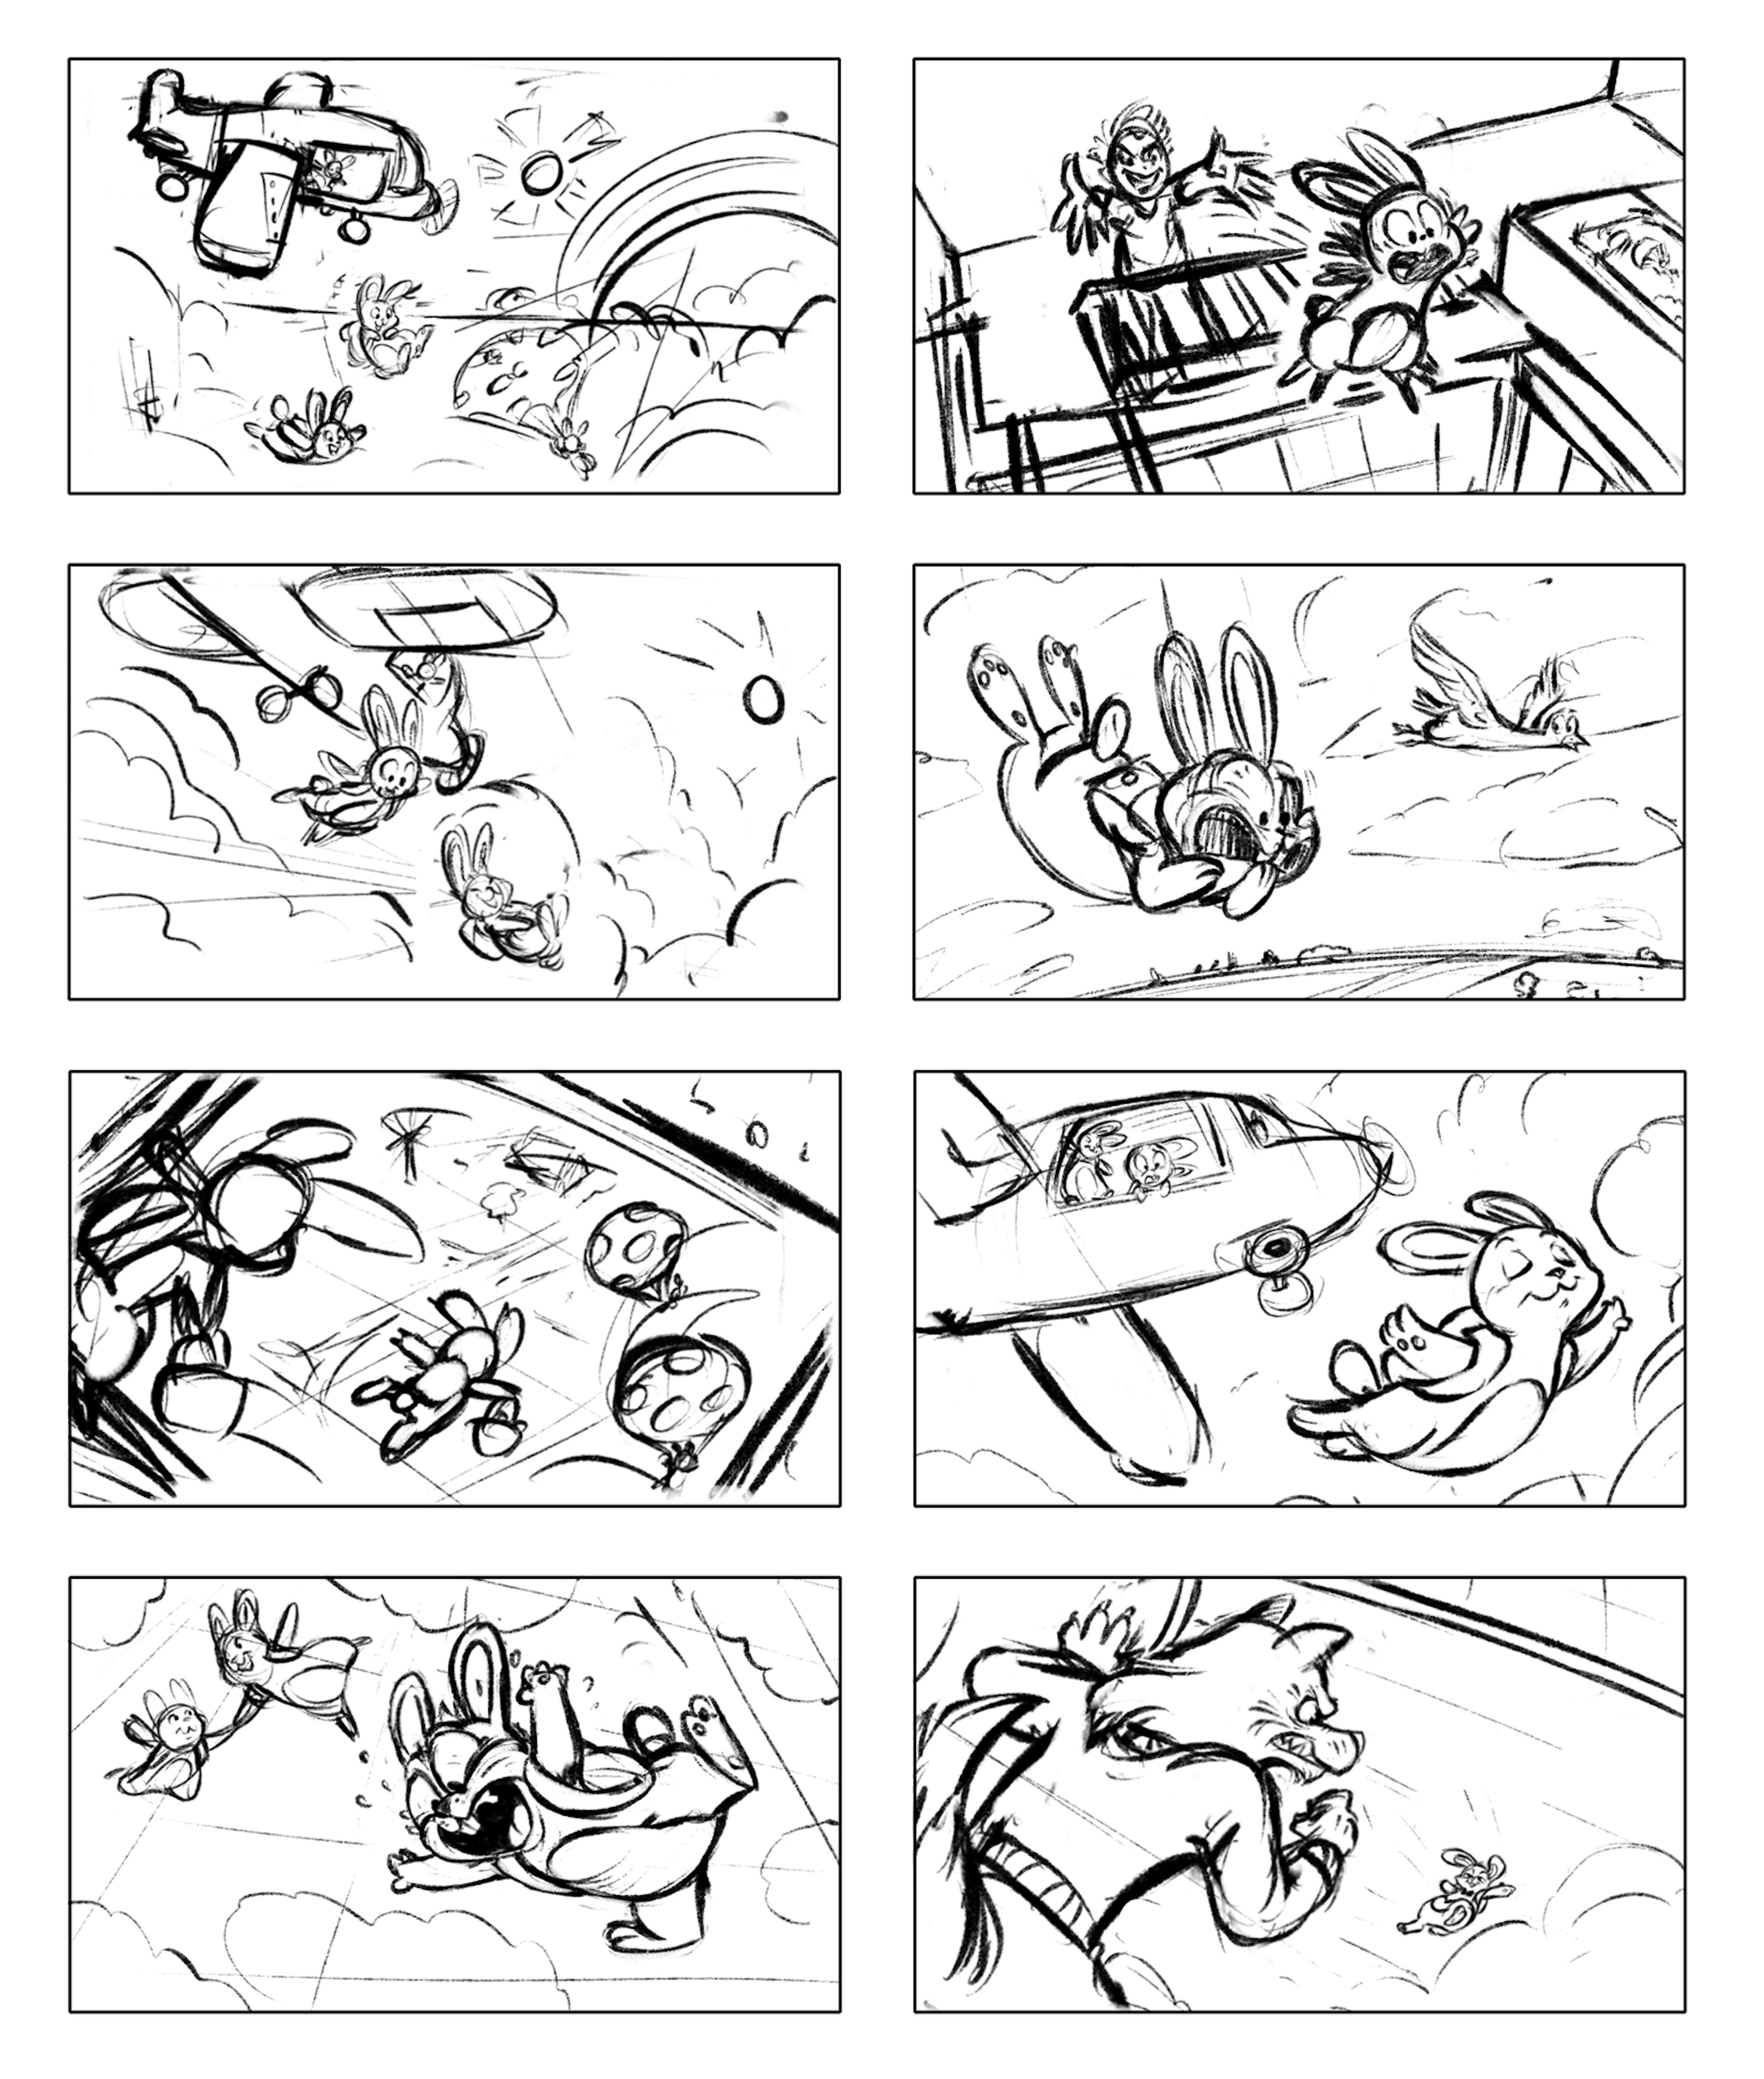 Storyboards of a falling scene